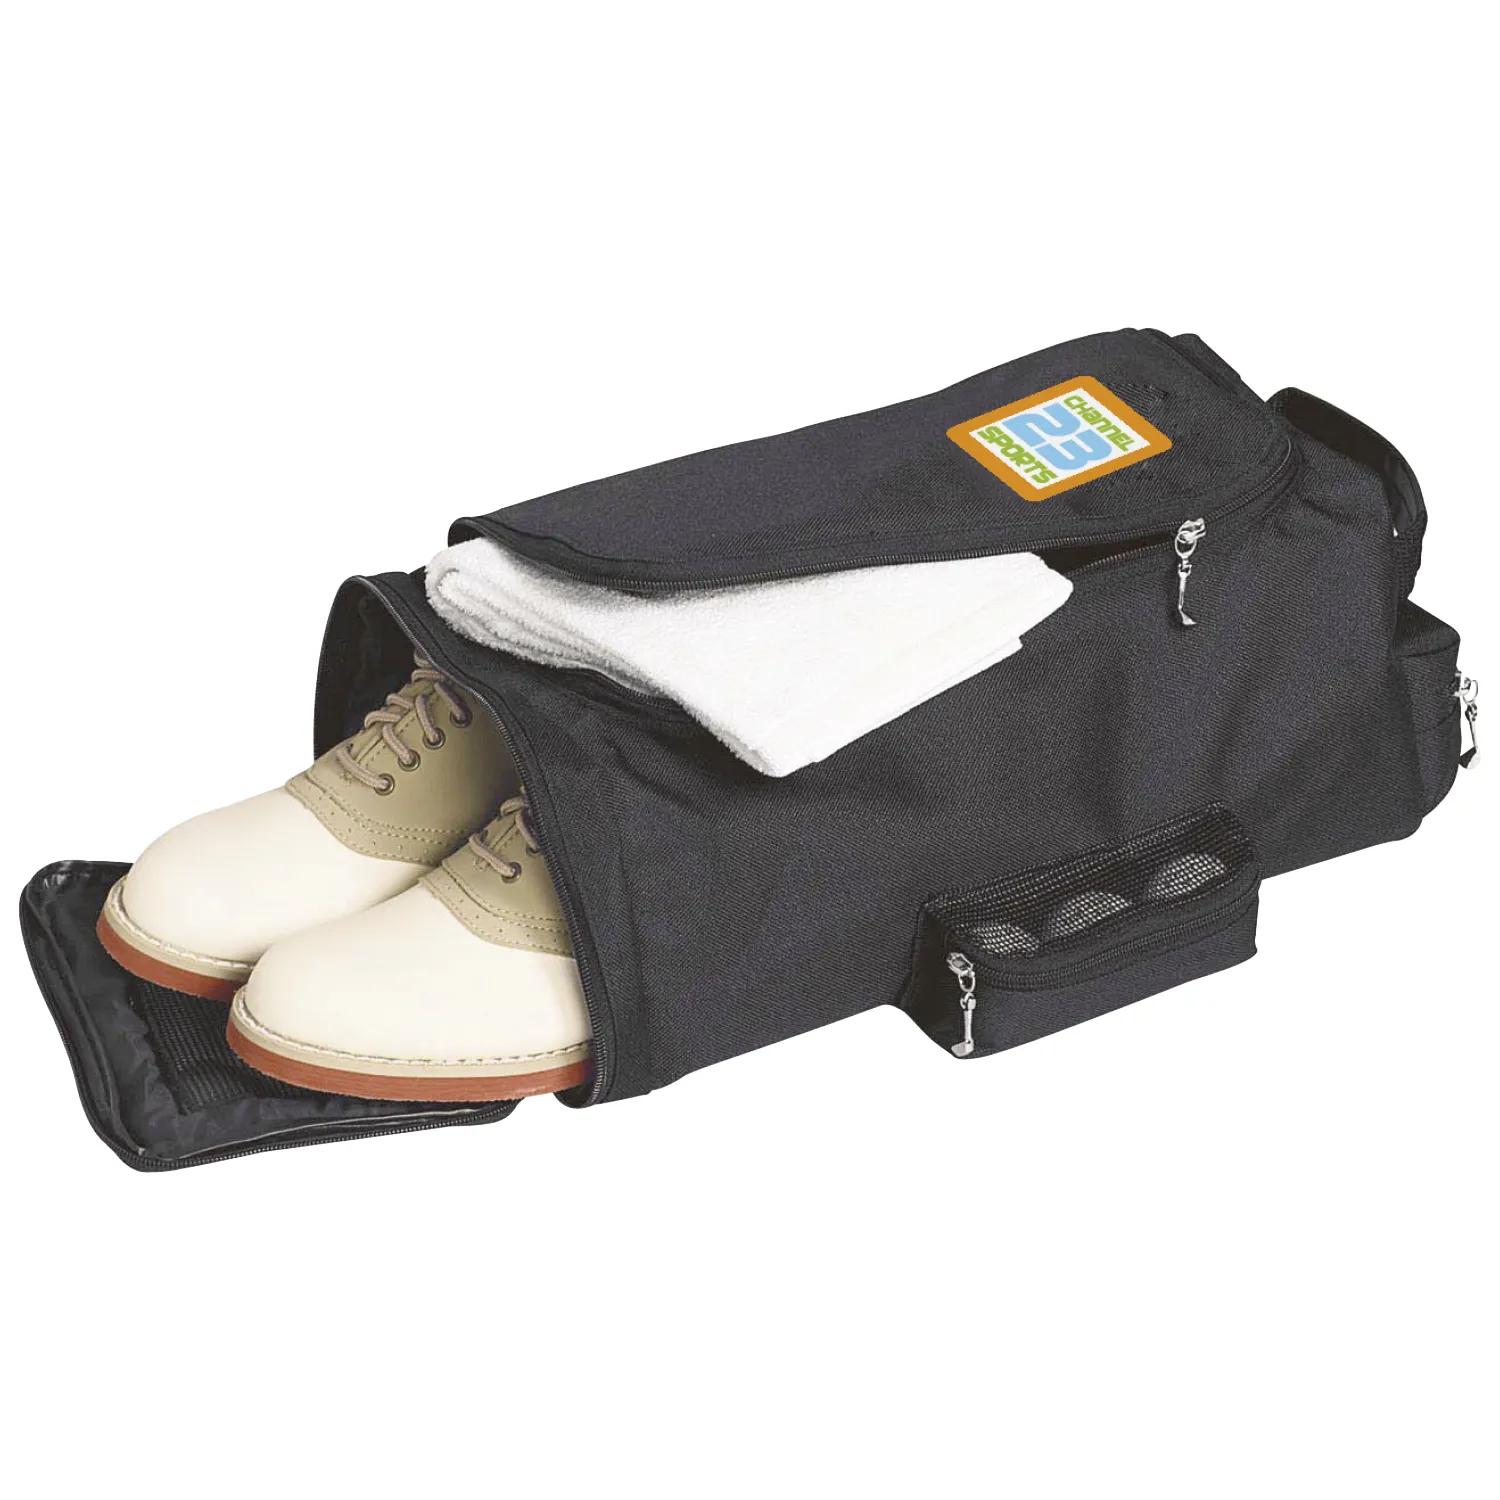 Golfer's Travel Shoe Bag 2 of 3